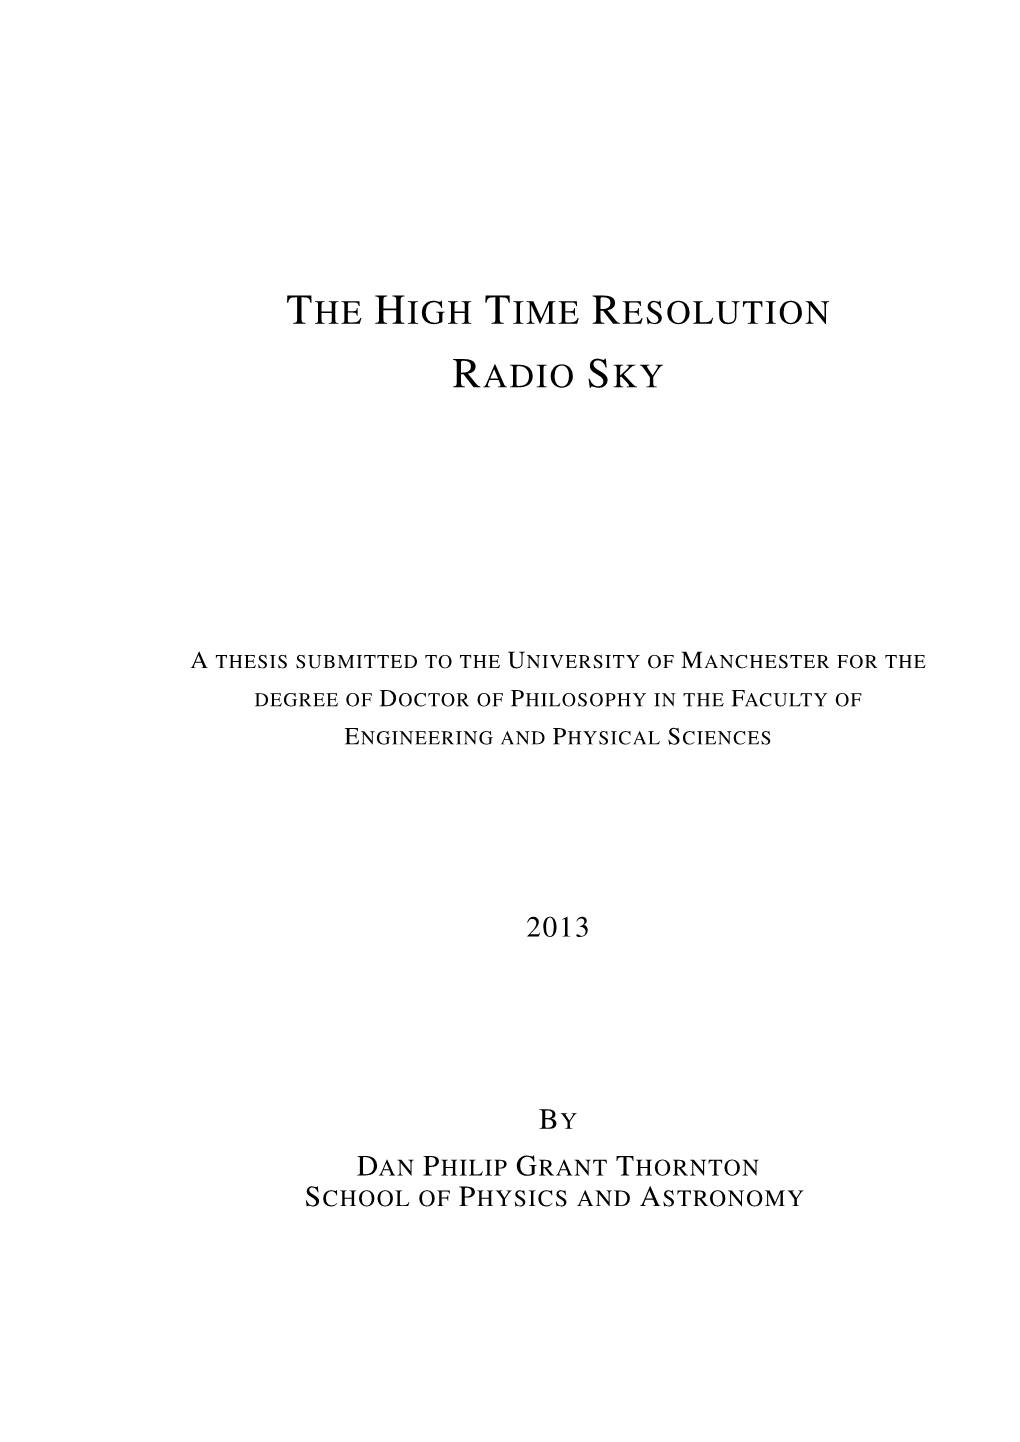 The High Time Resolution Radio Sky